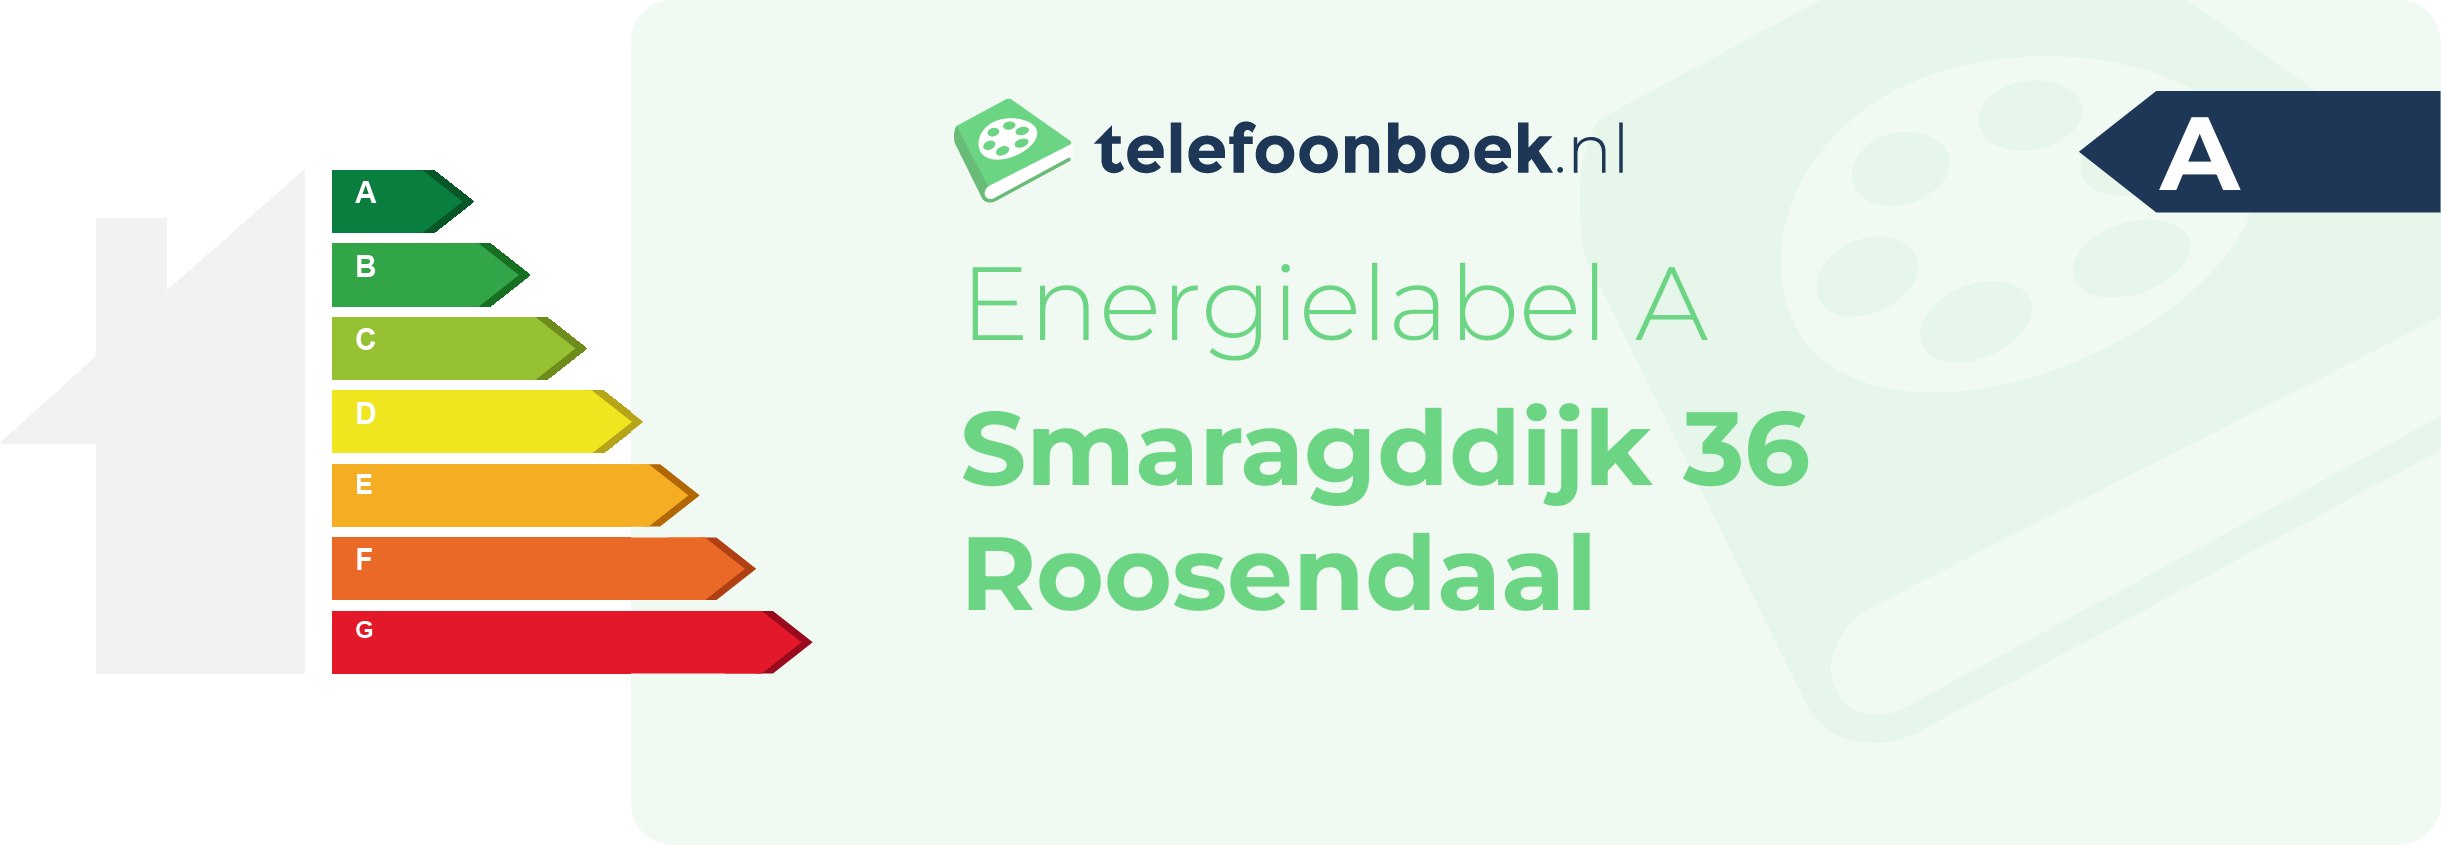 Energielabel Smaragddijk 36 Roosendaal